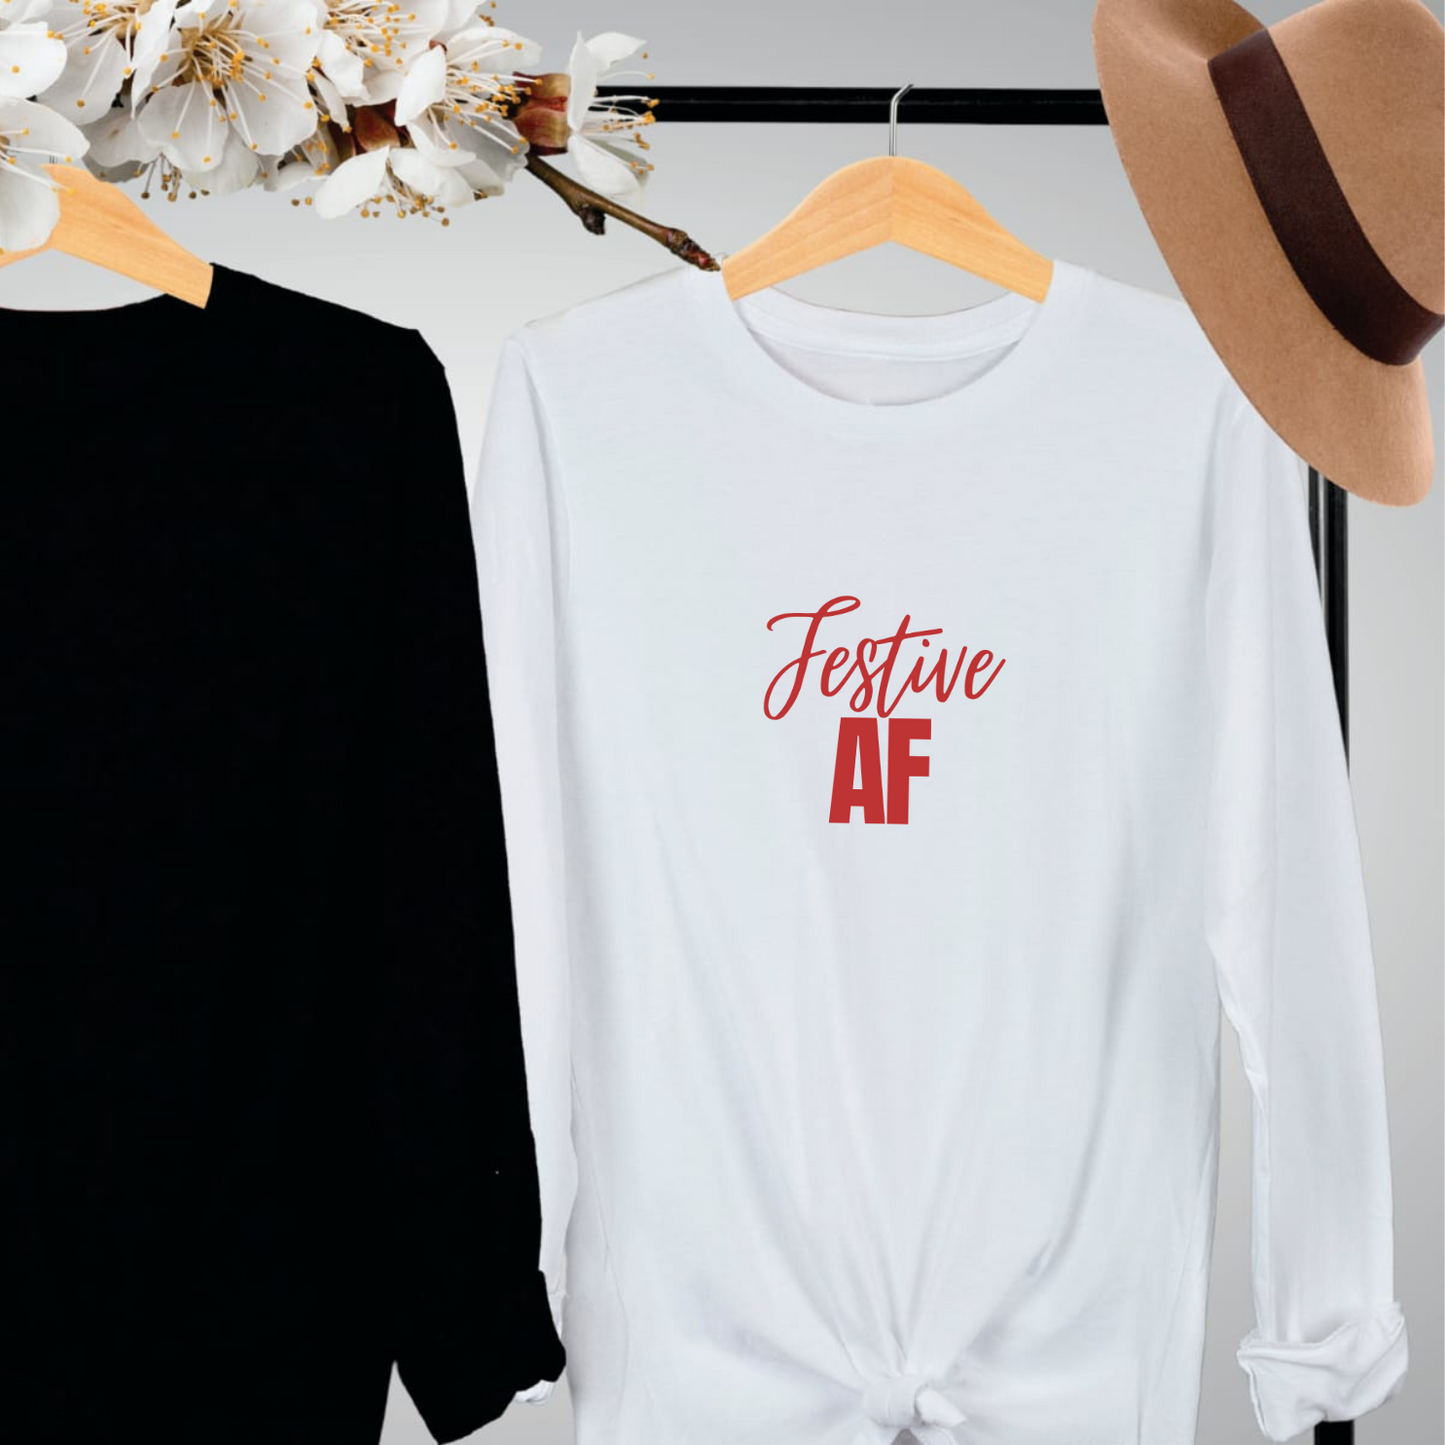 "Festive AF text design centered on a white unisex long sleeve shirt."